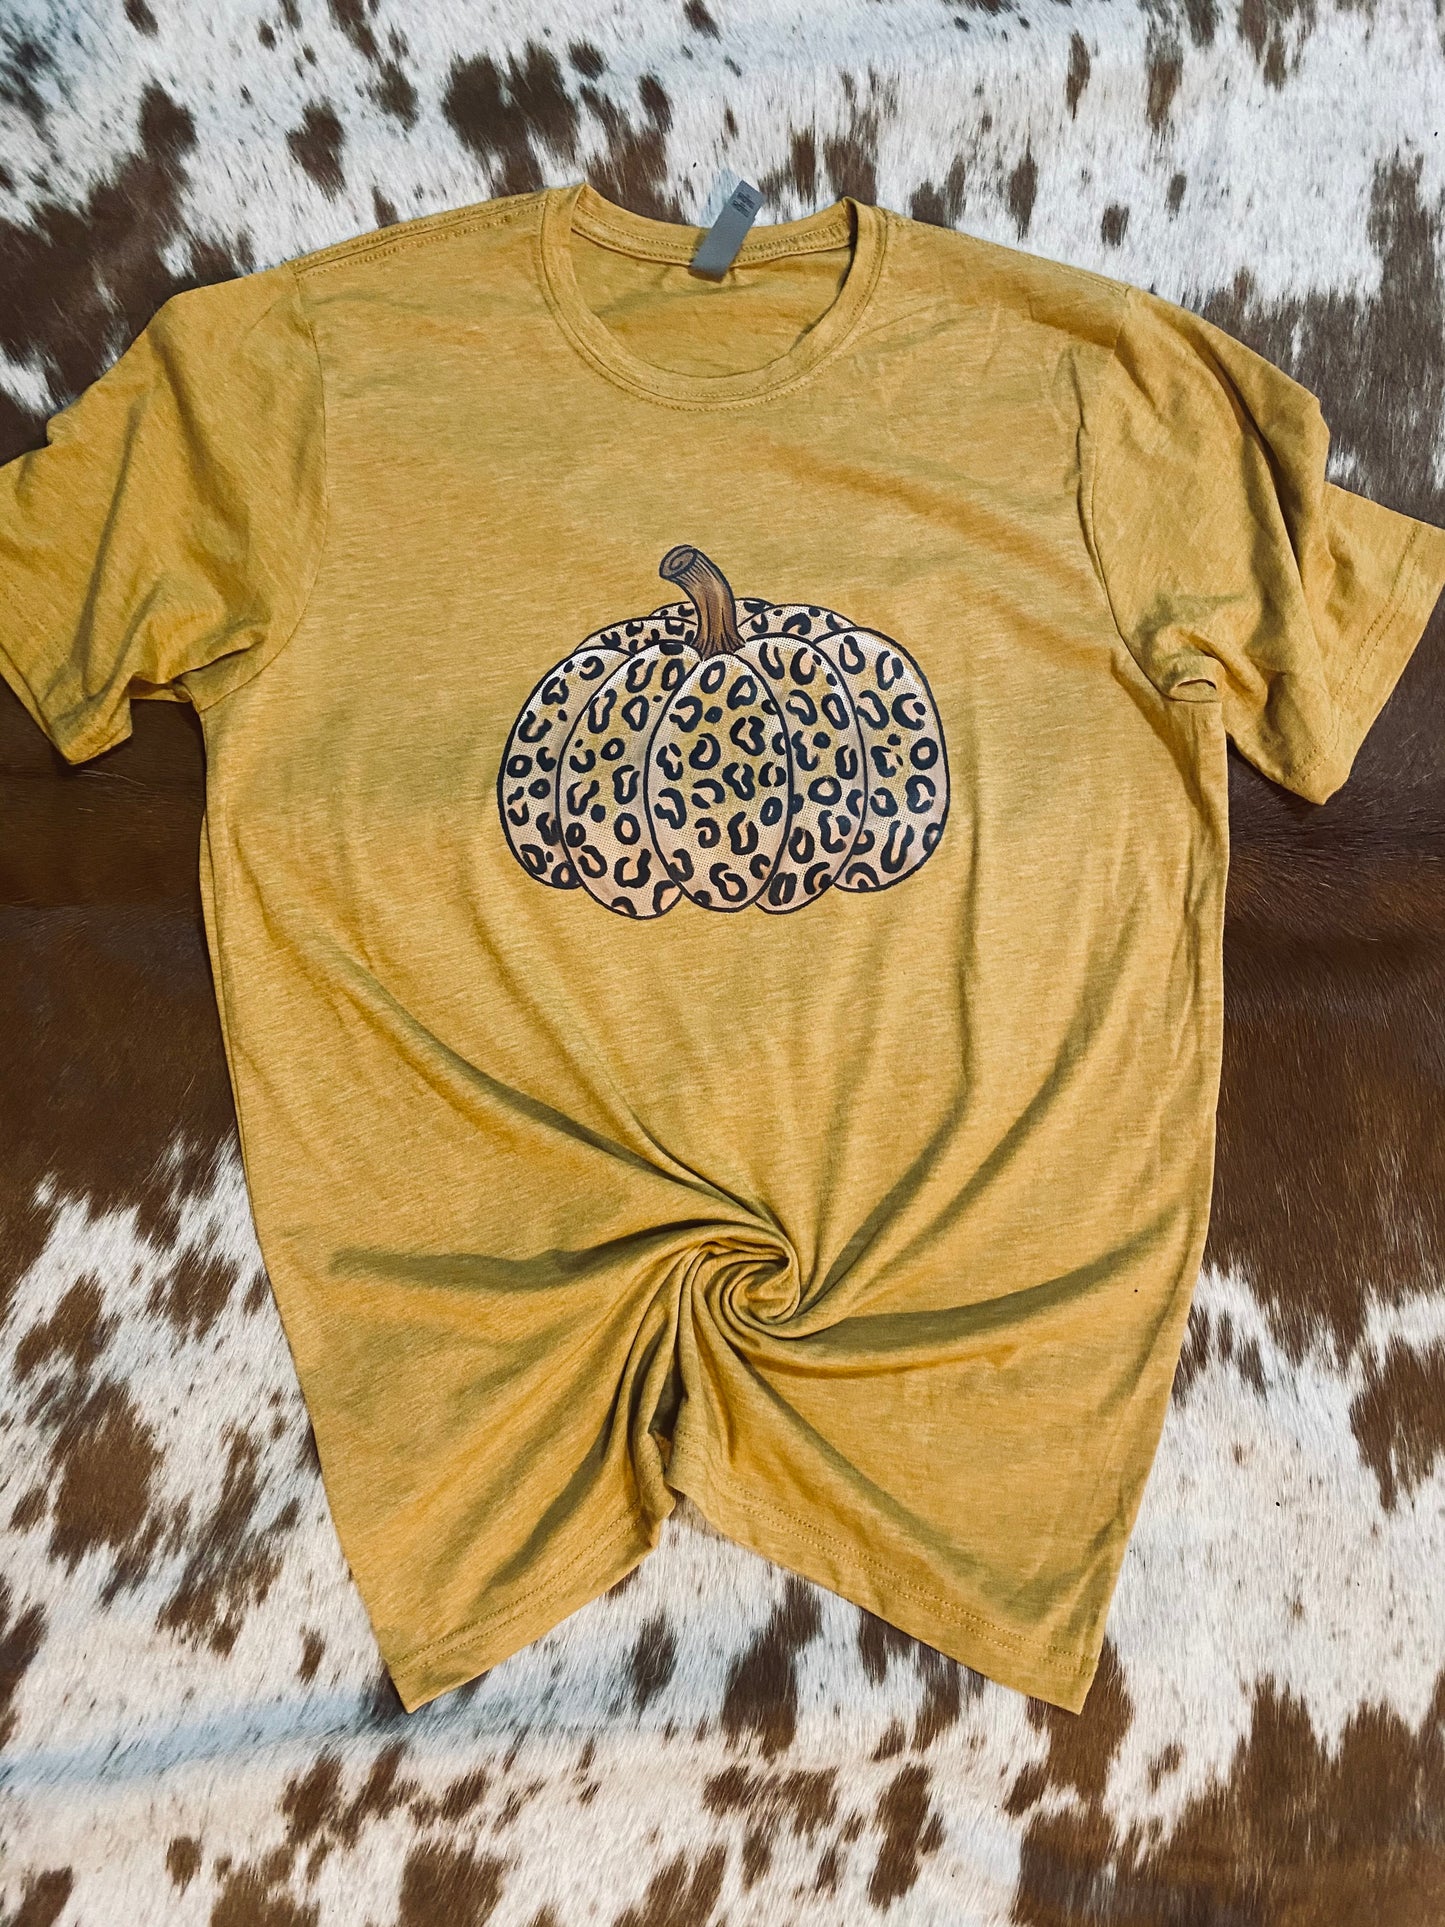 Cheetah Pumpkin screen Printed Shirt